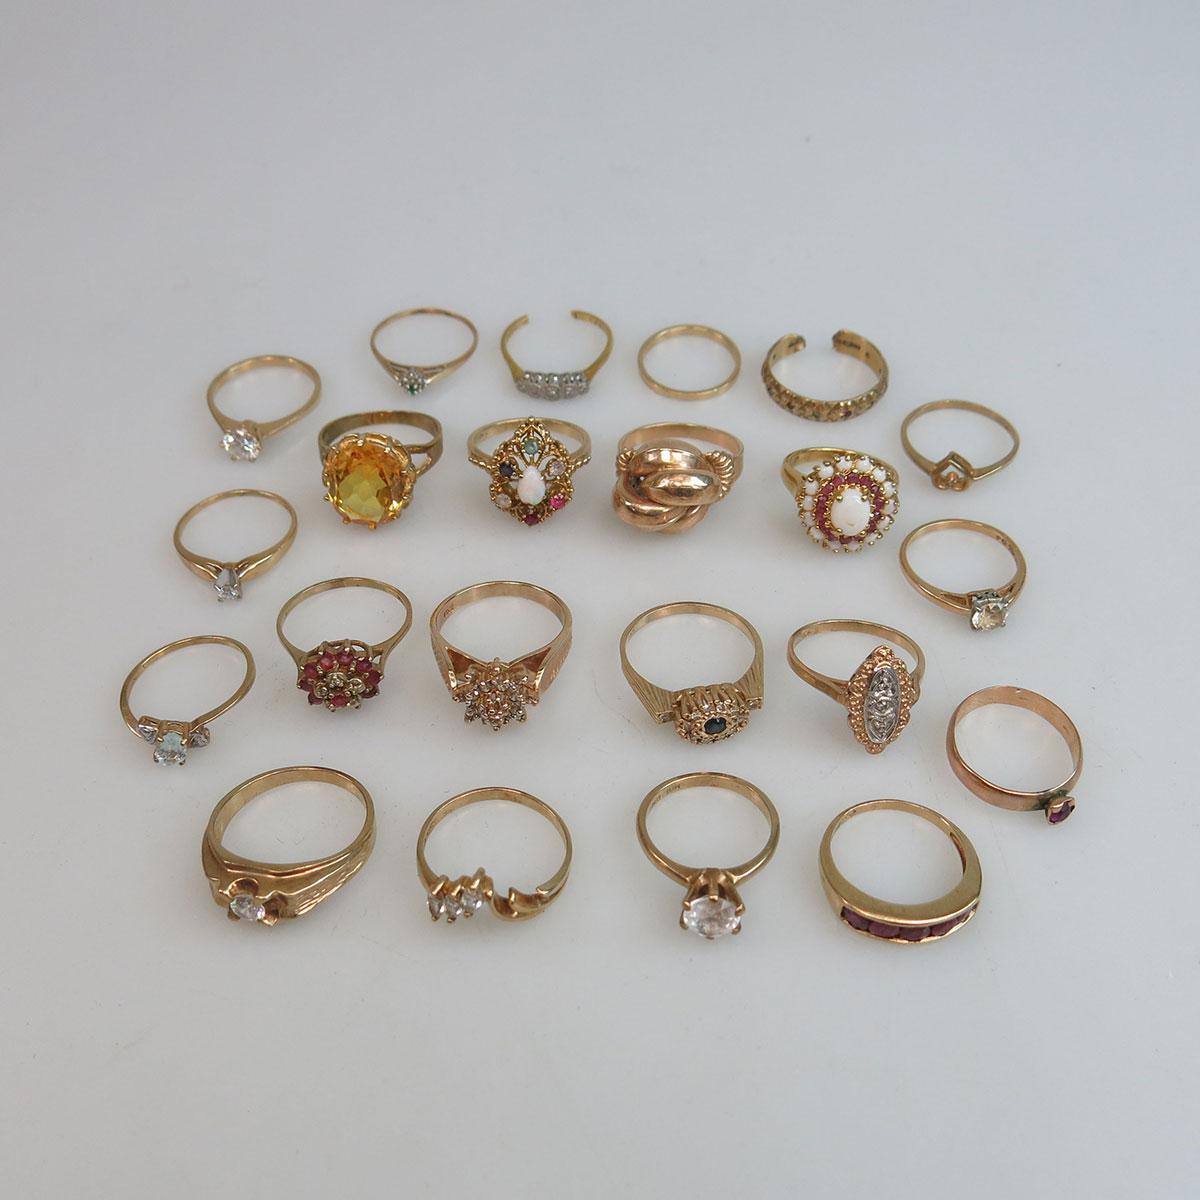 22 Various Gold Rings